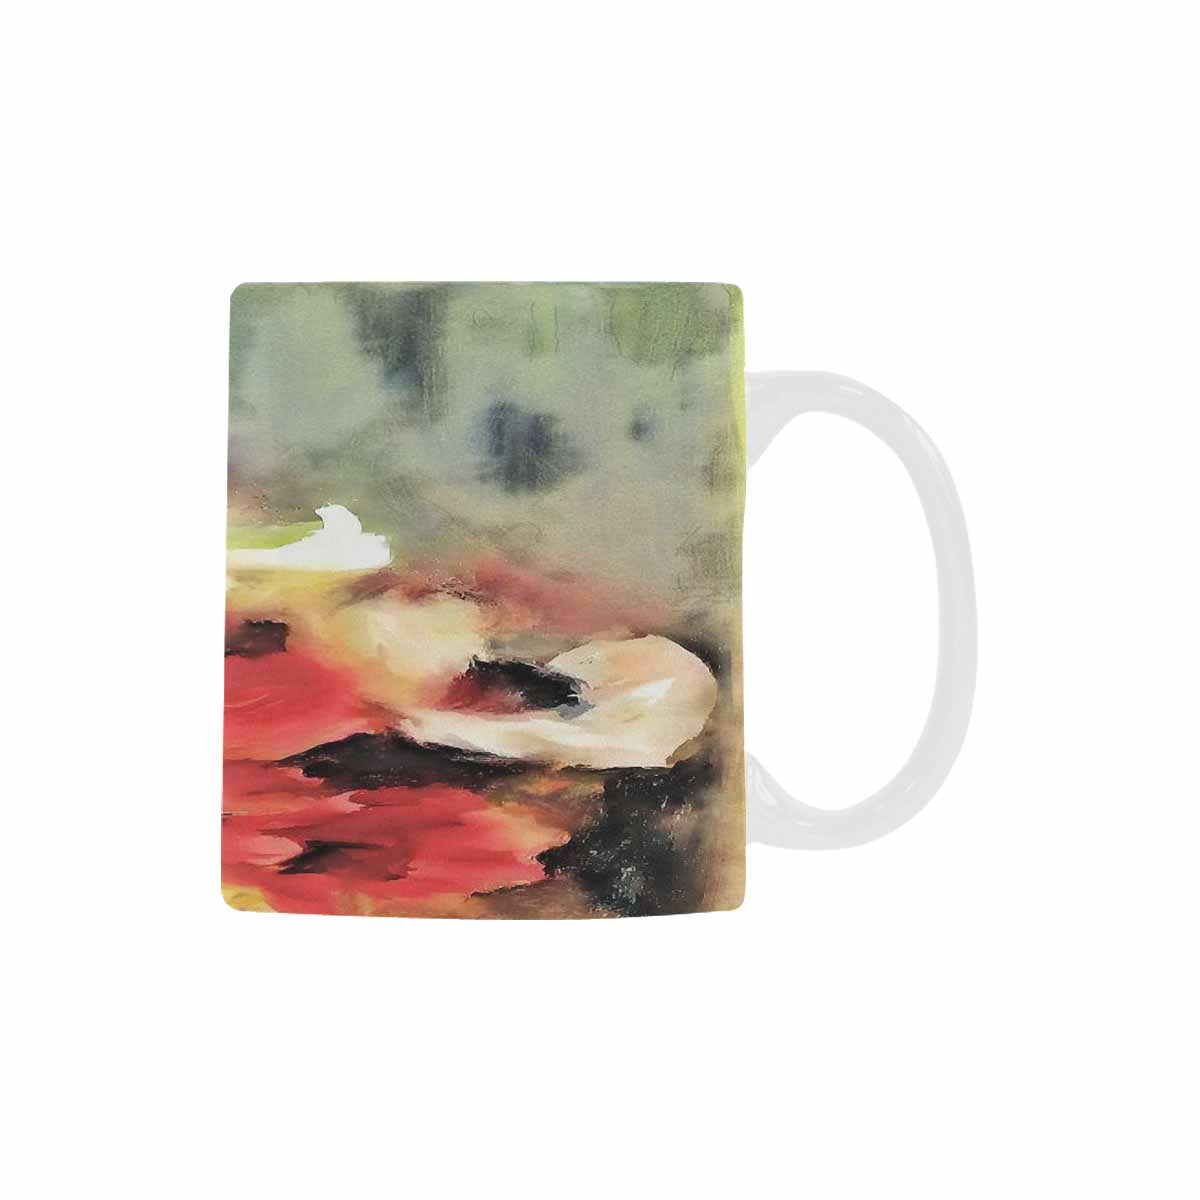 Vintage floral coffee mug or tea cup, Design 14